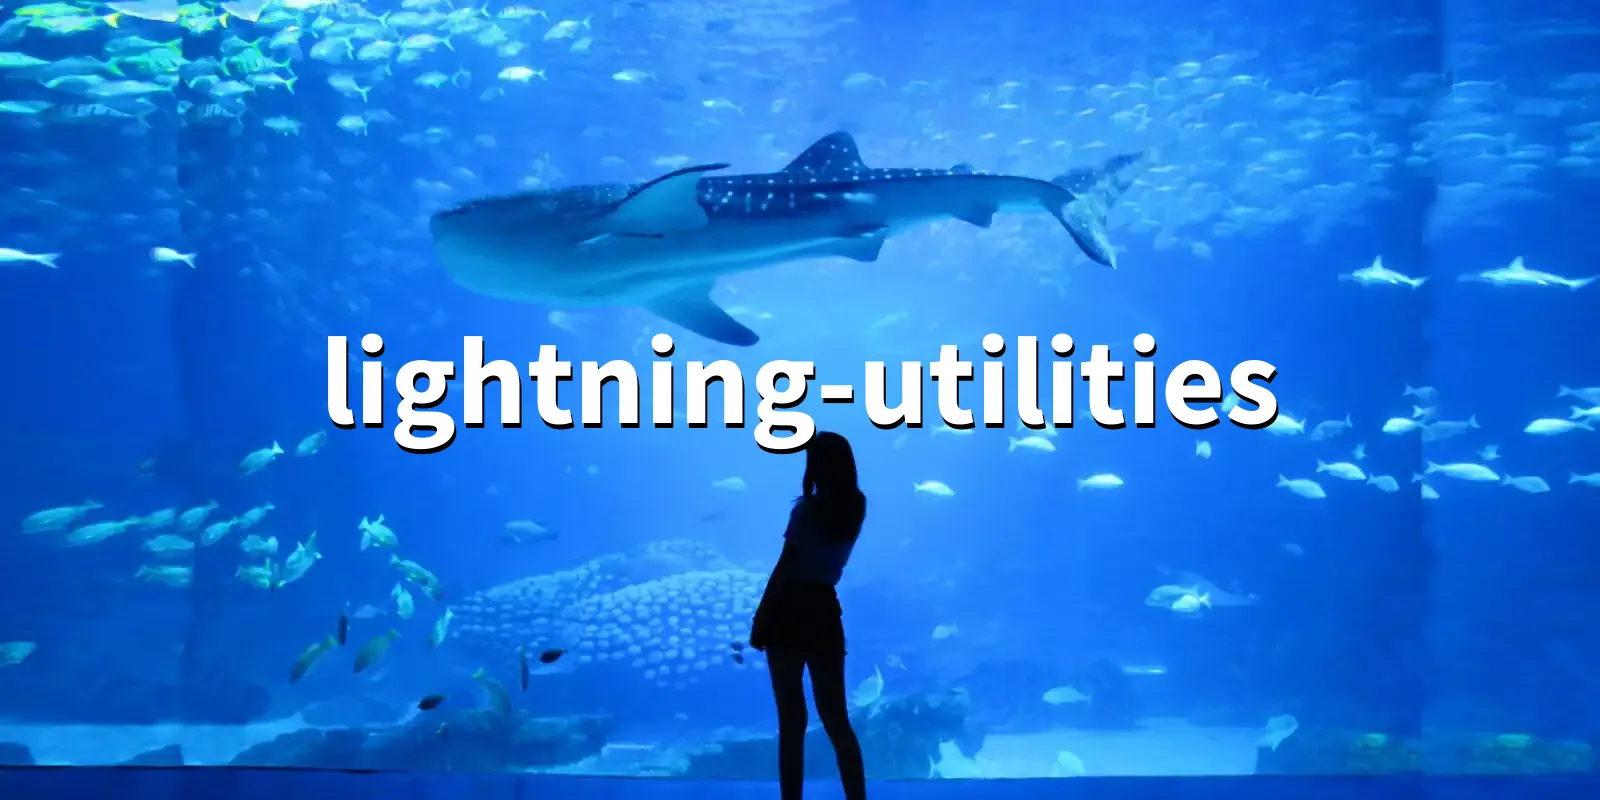 /pkg/l/lightning-utilities/lightning-utilities-banner.webp